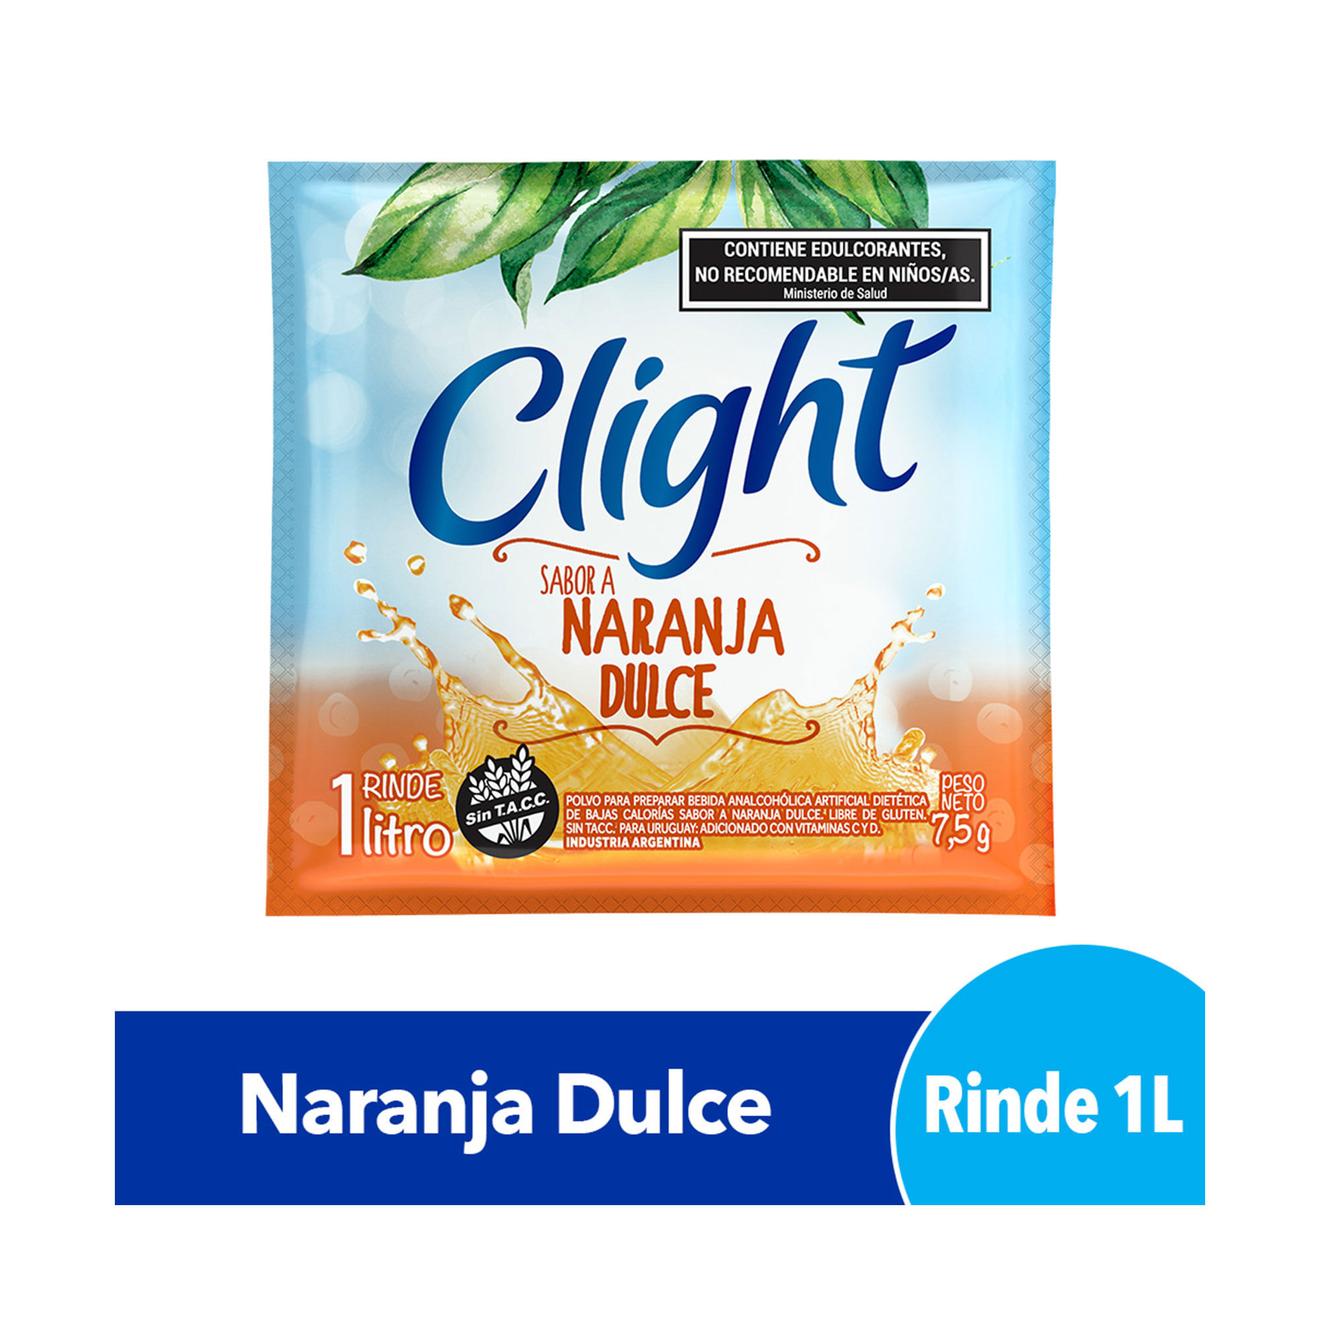 Oferta de Jugo en polvo Clight naranja dulce 7.5 g. por $285 en Carrefour